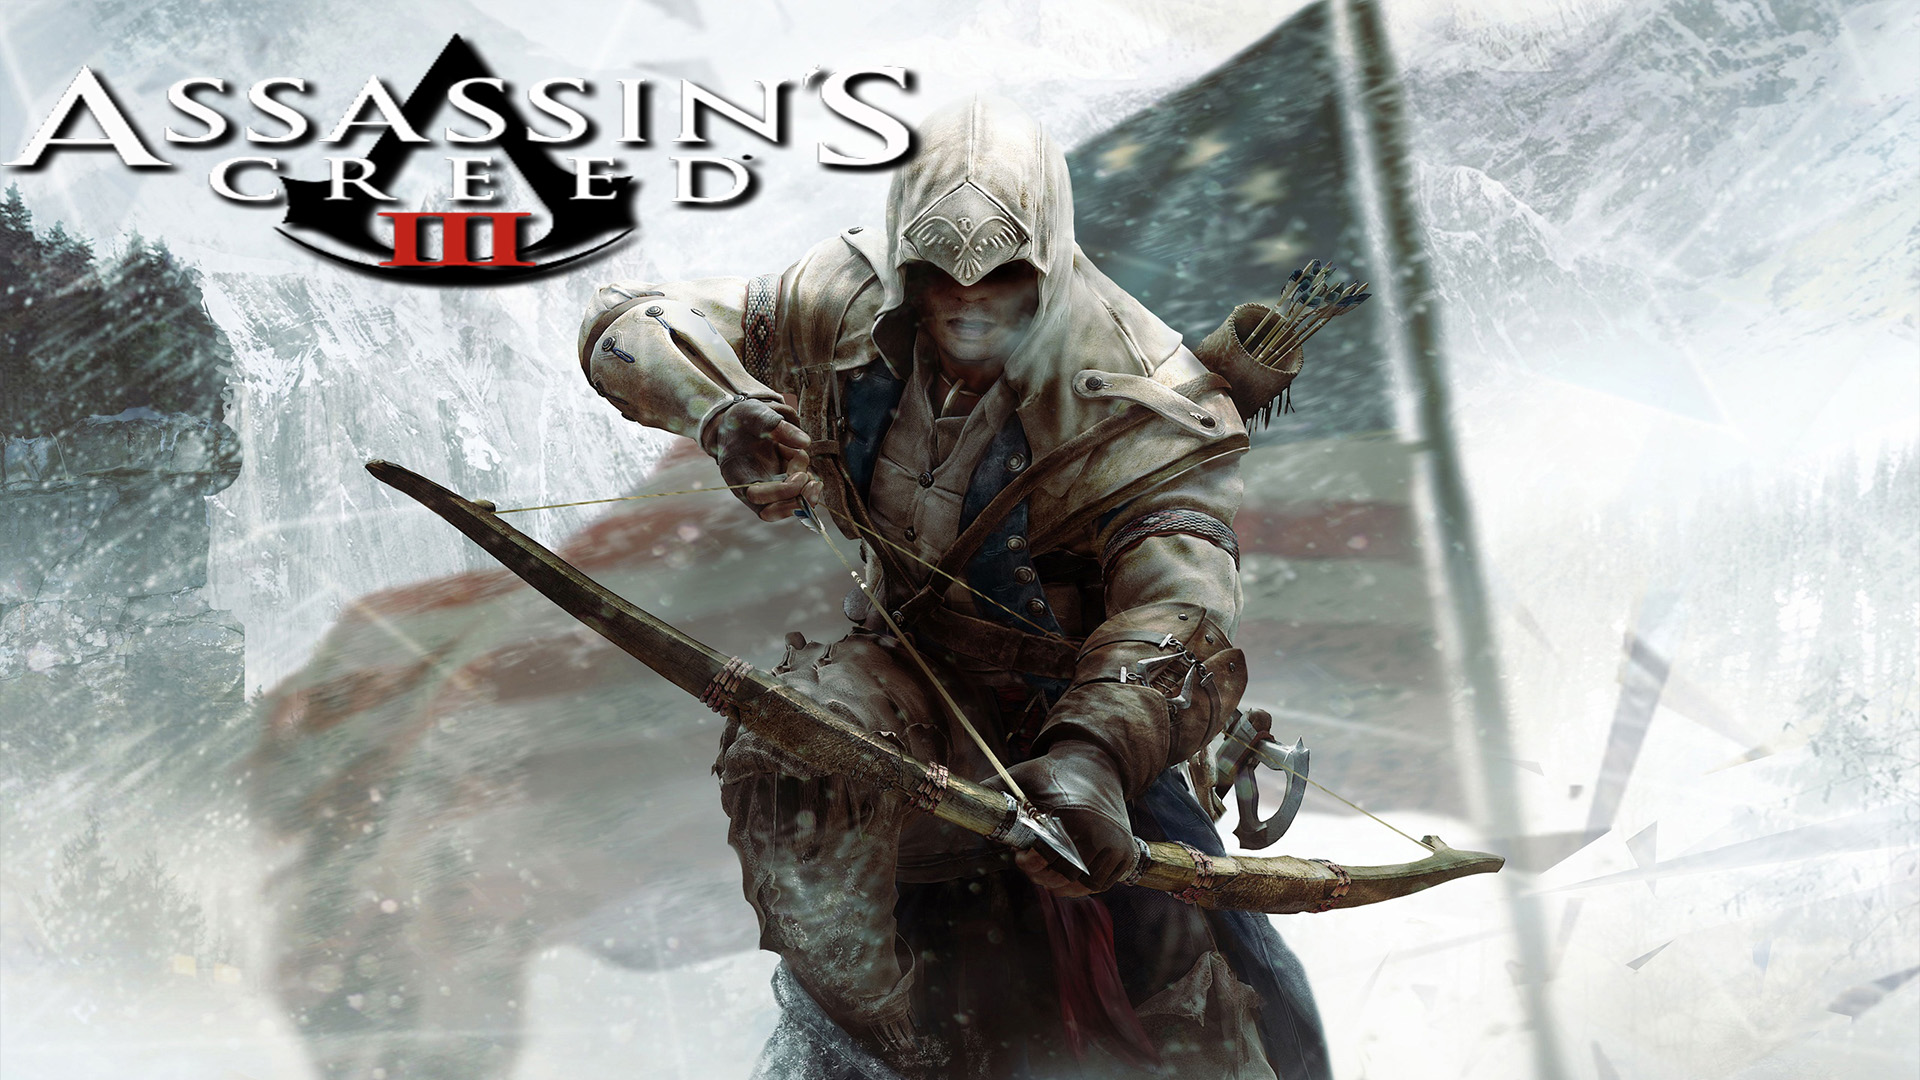 Descarga gratuita de fondo de pantalla para móvil de Assassin's Creed Iii, Assassin's Creed, Videojuego.